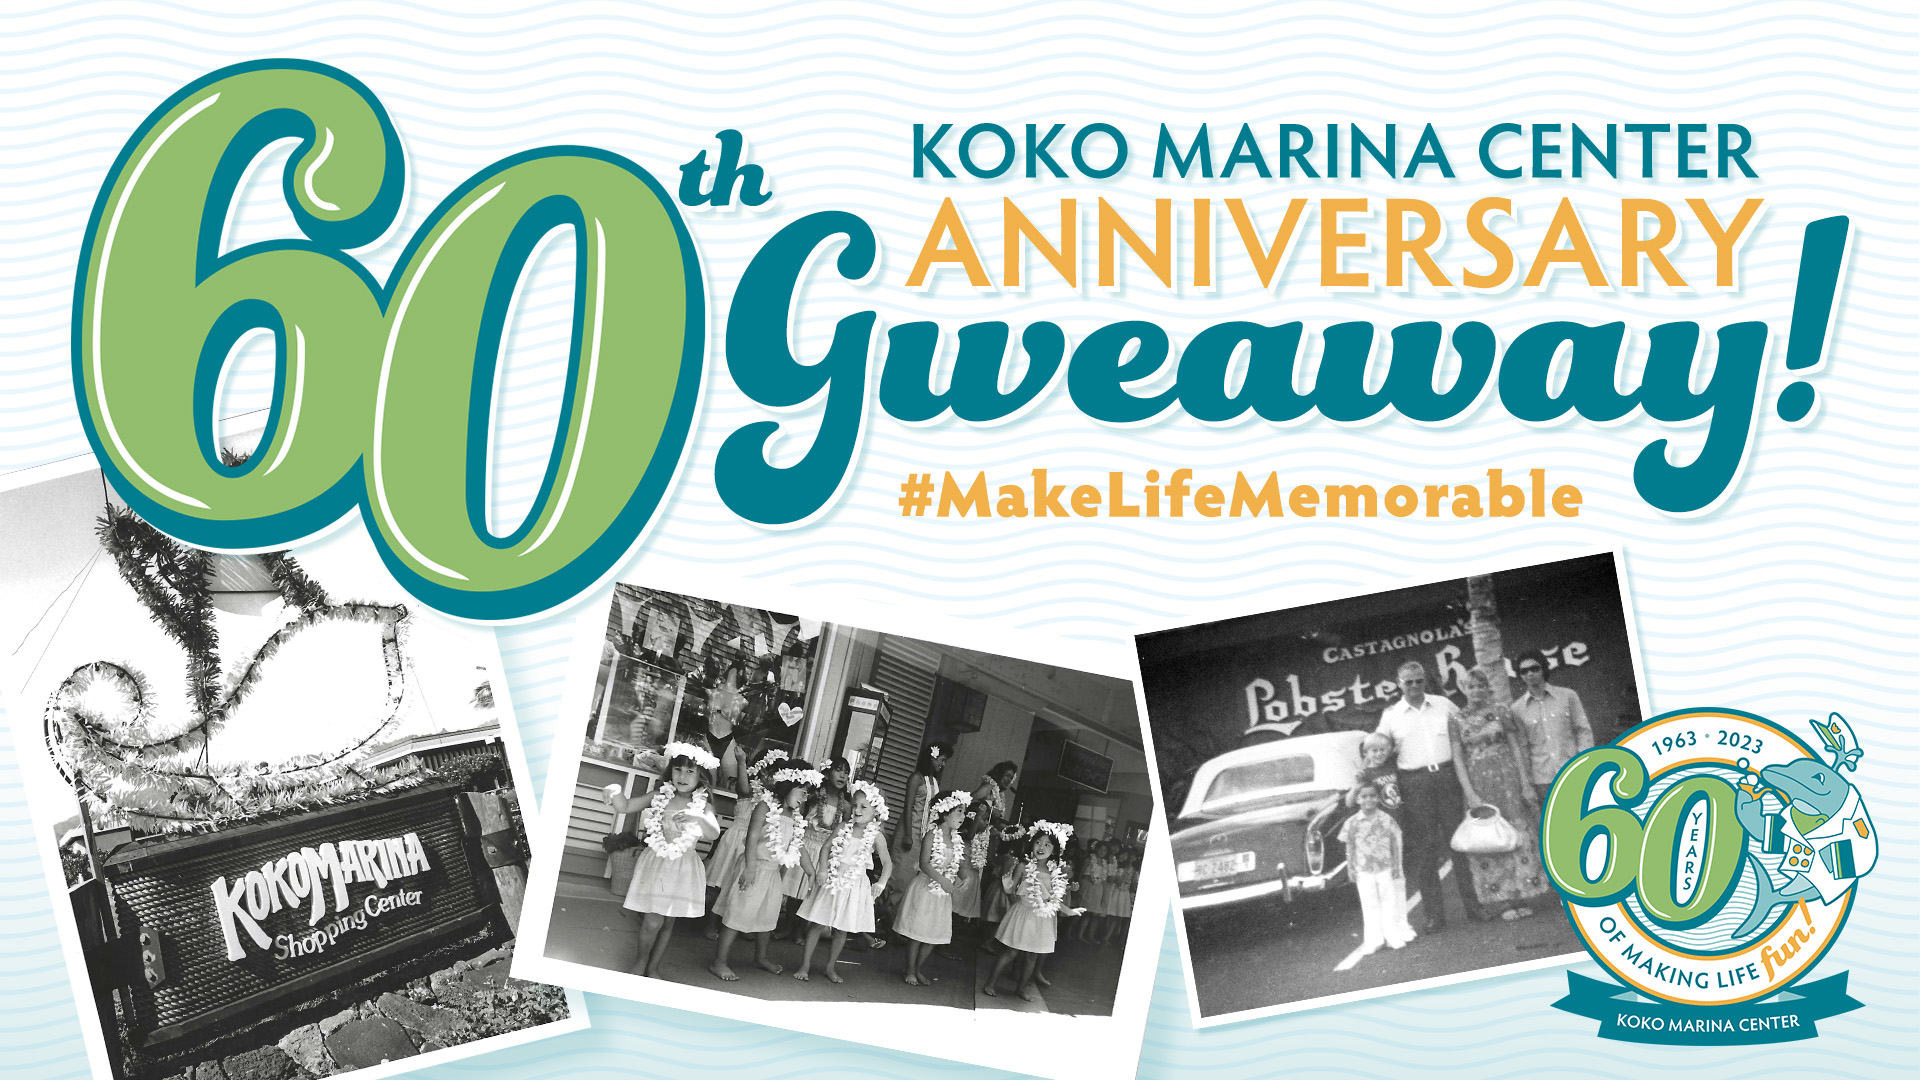 Koko Marina Center's 60th Anniversary Giveaway